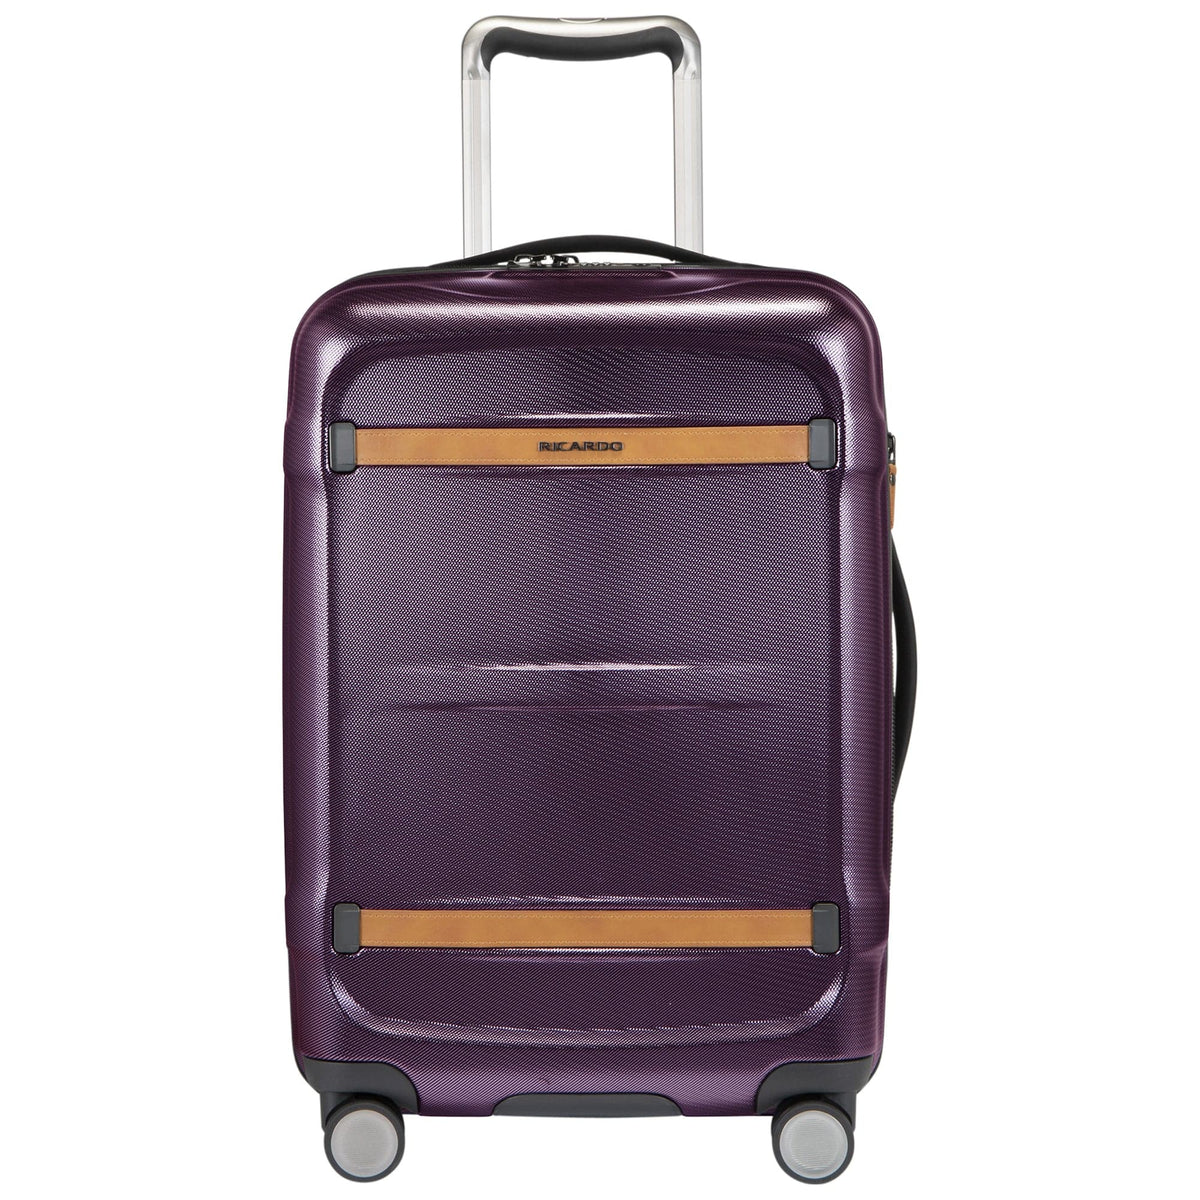 Ricardo Beverly Hills Montecito Carry-On Hardside Luggage